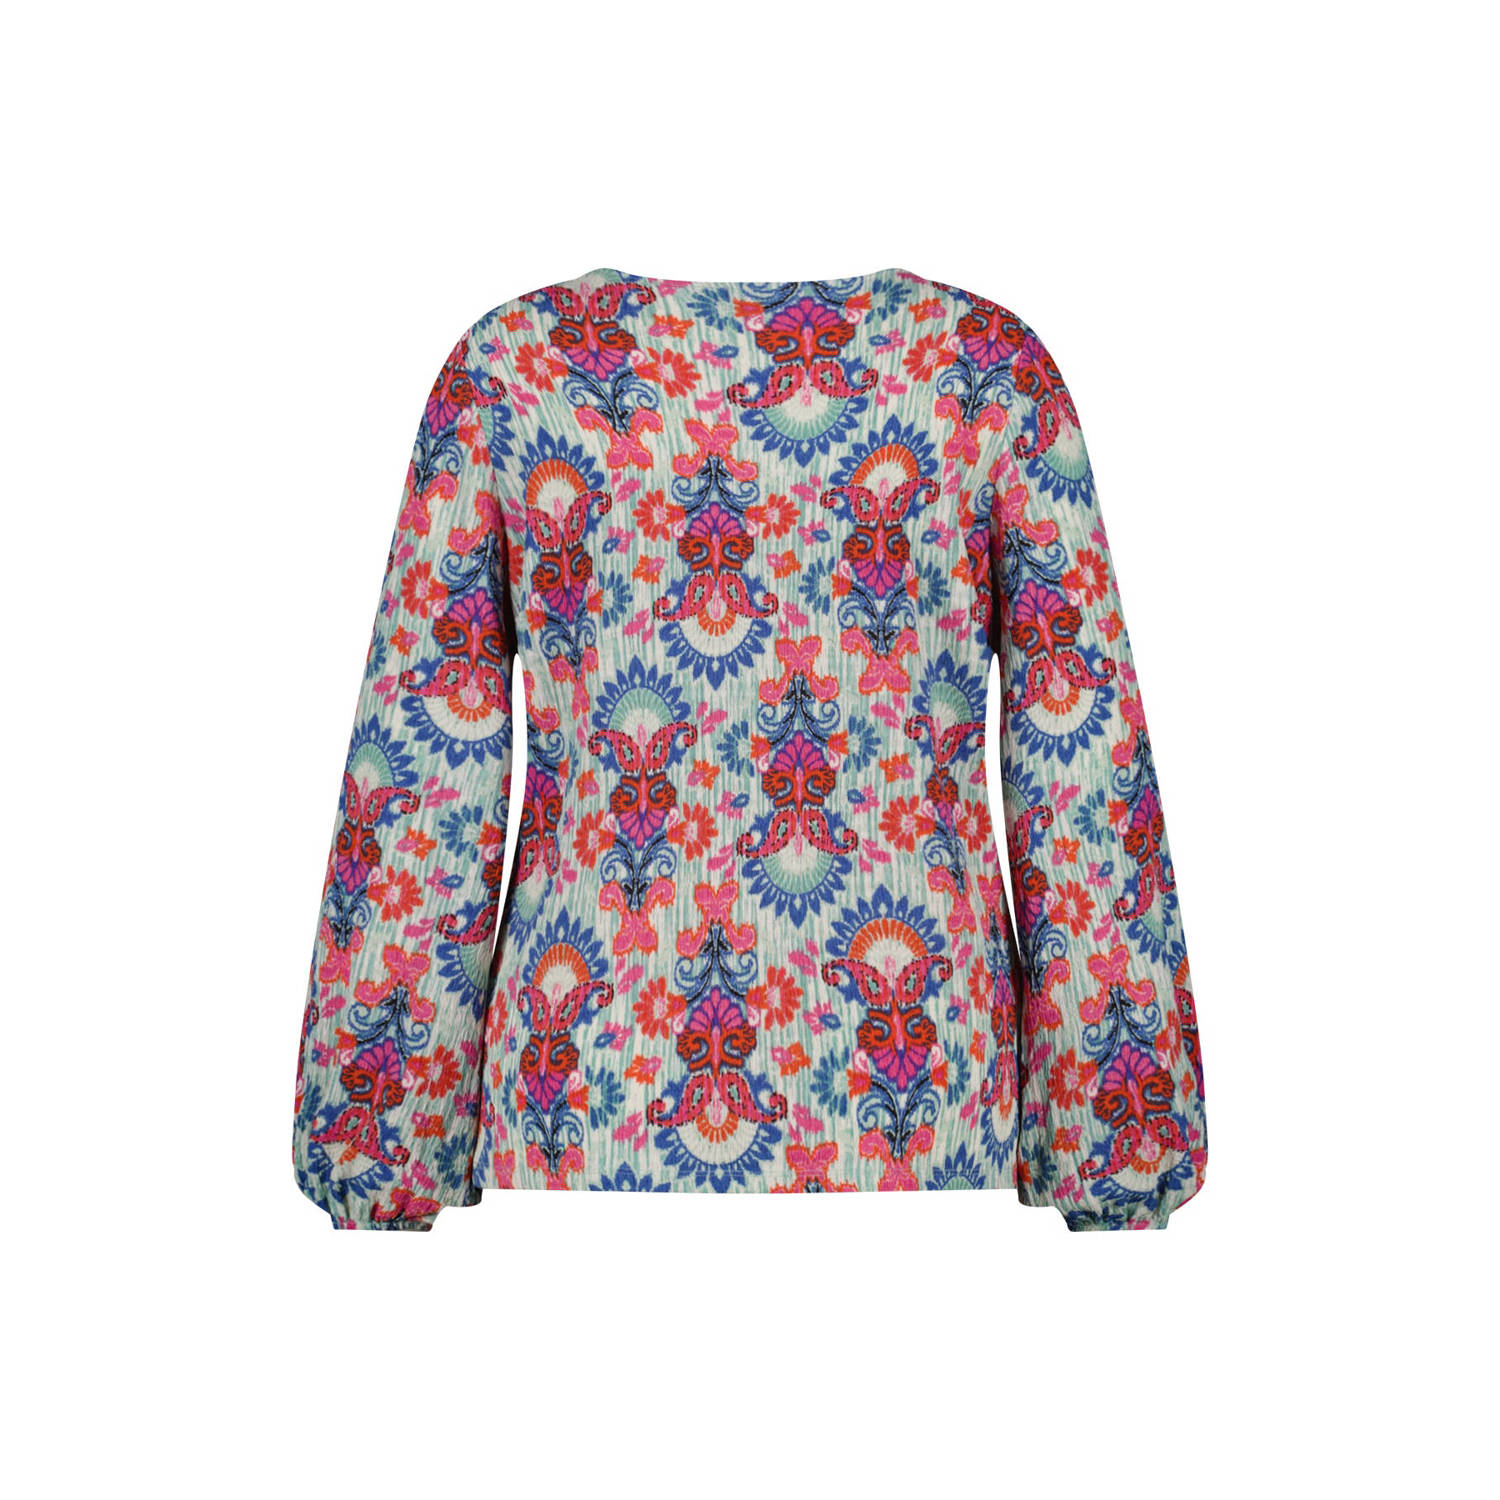 MS Mode blousetop met paisleyprint roze kaki blauw